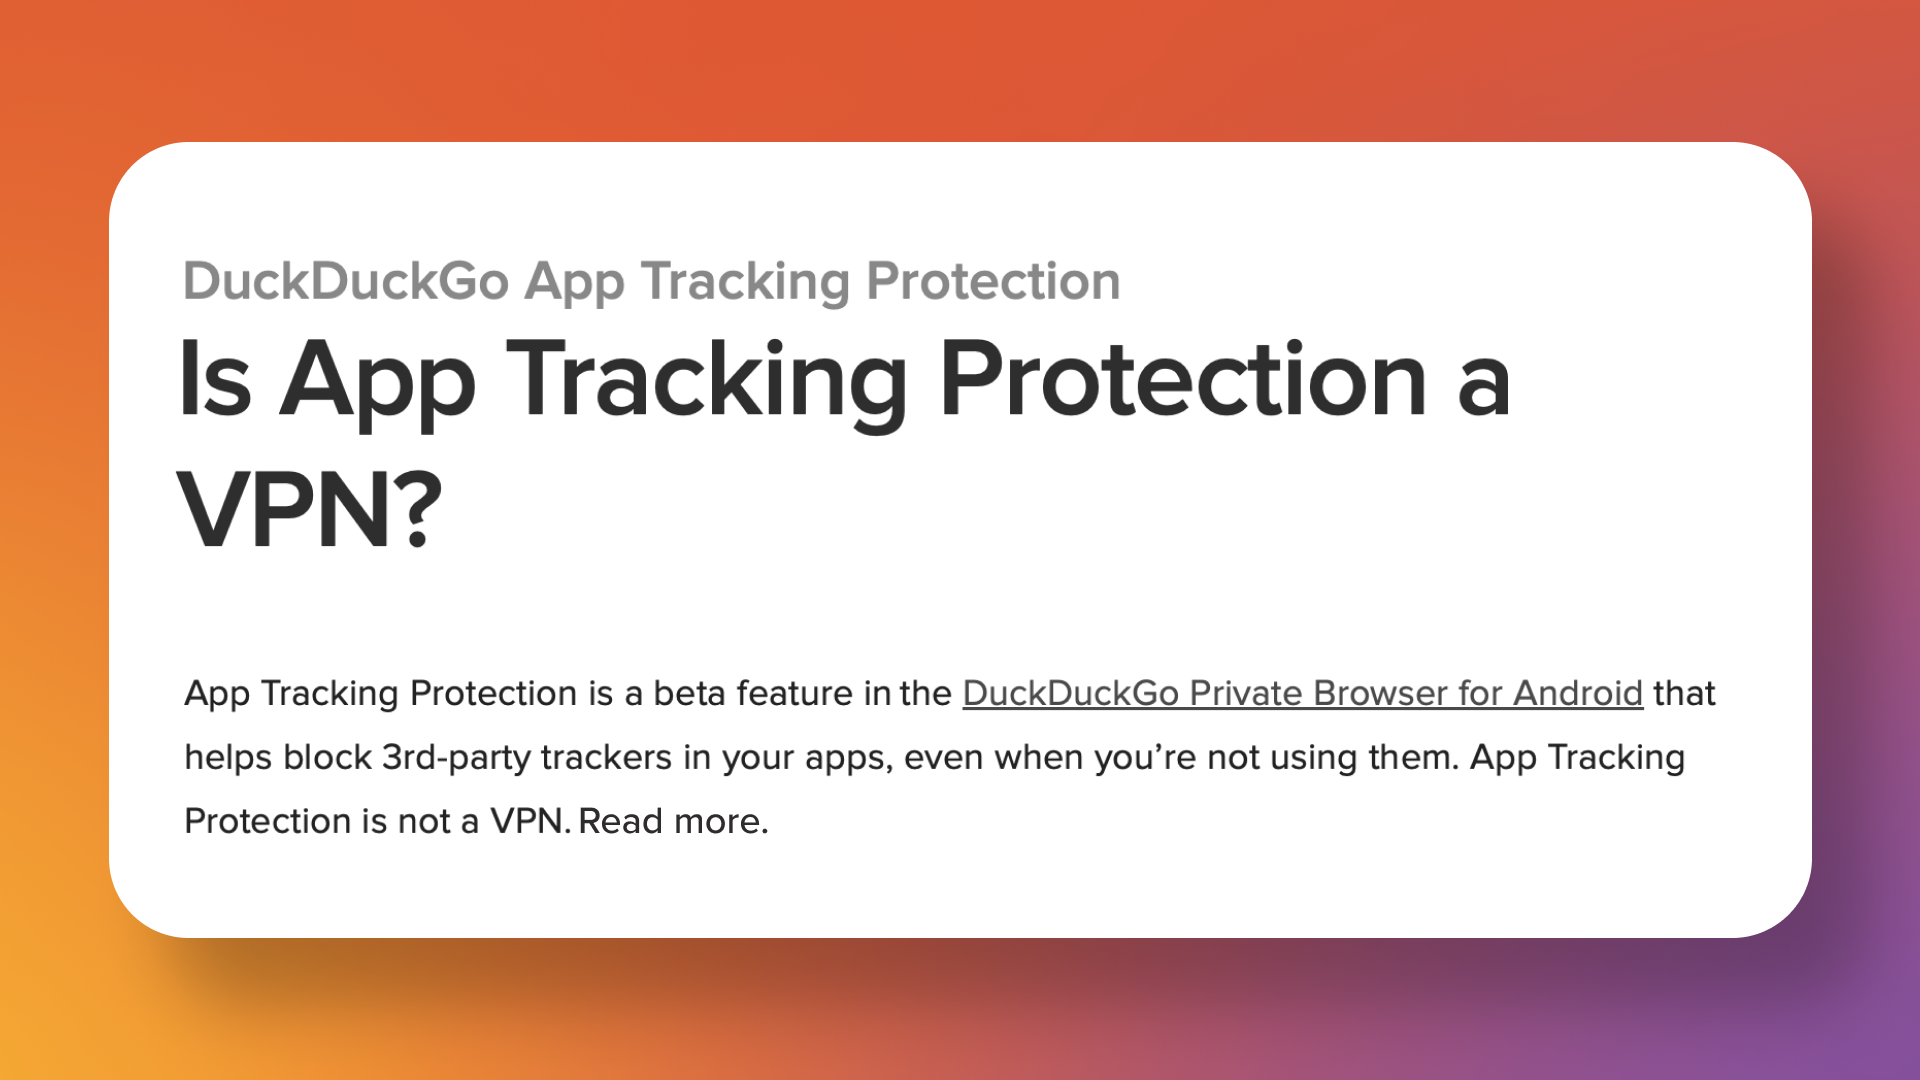 How do I enable VPN on DuckDuckGo?